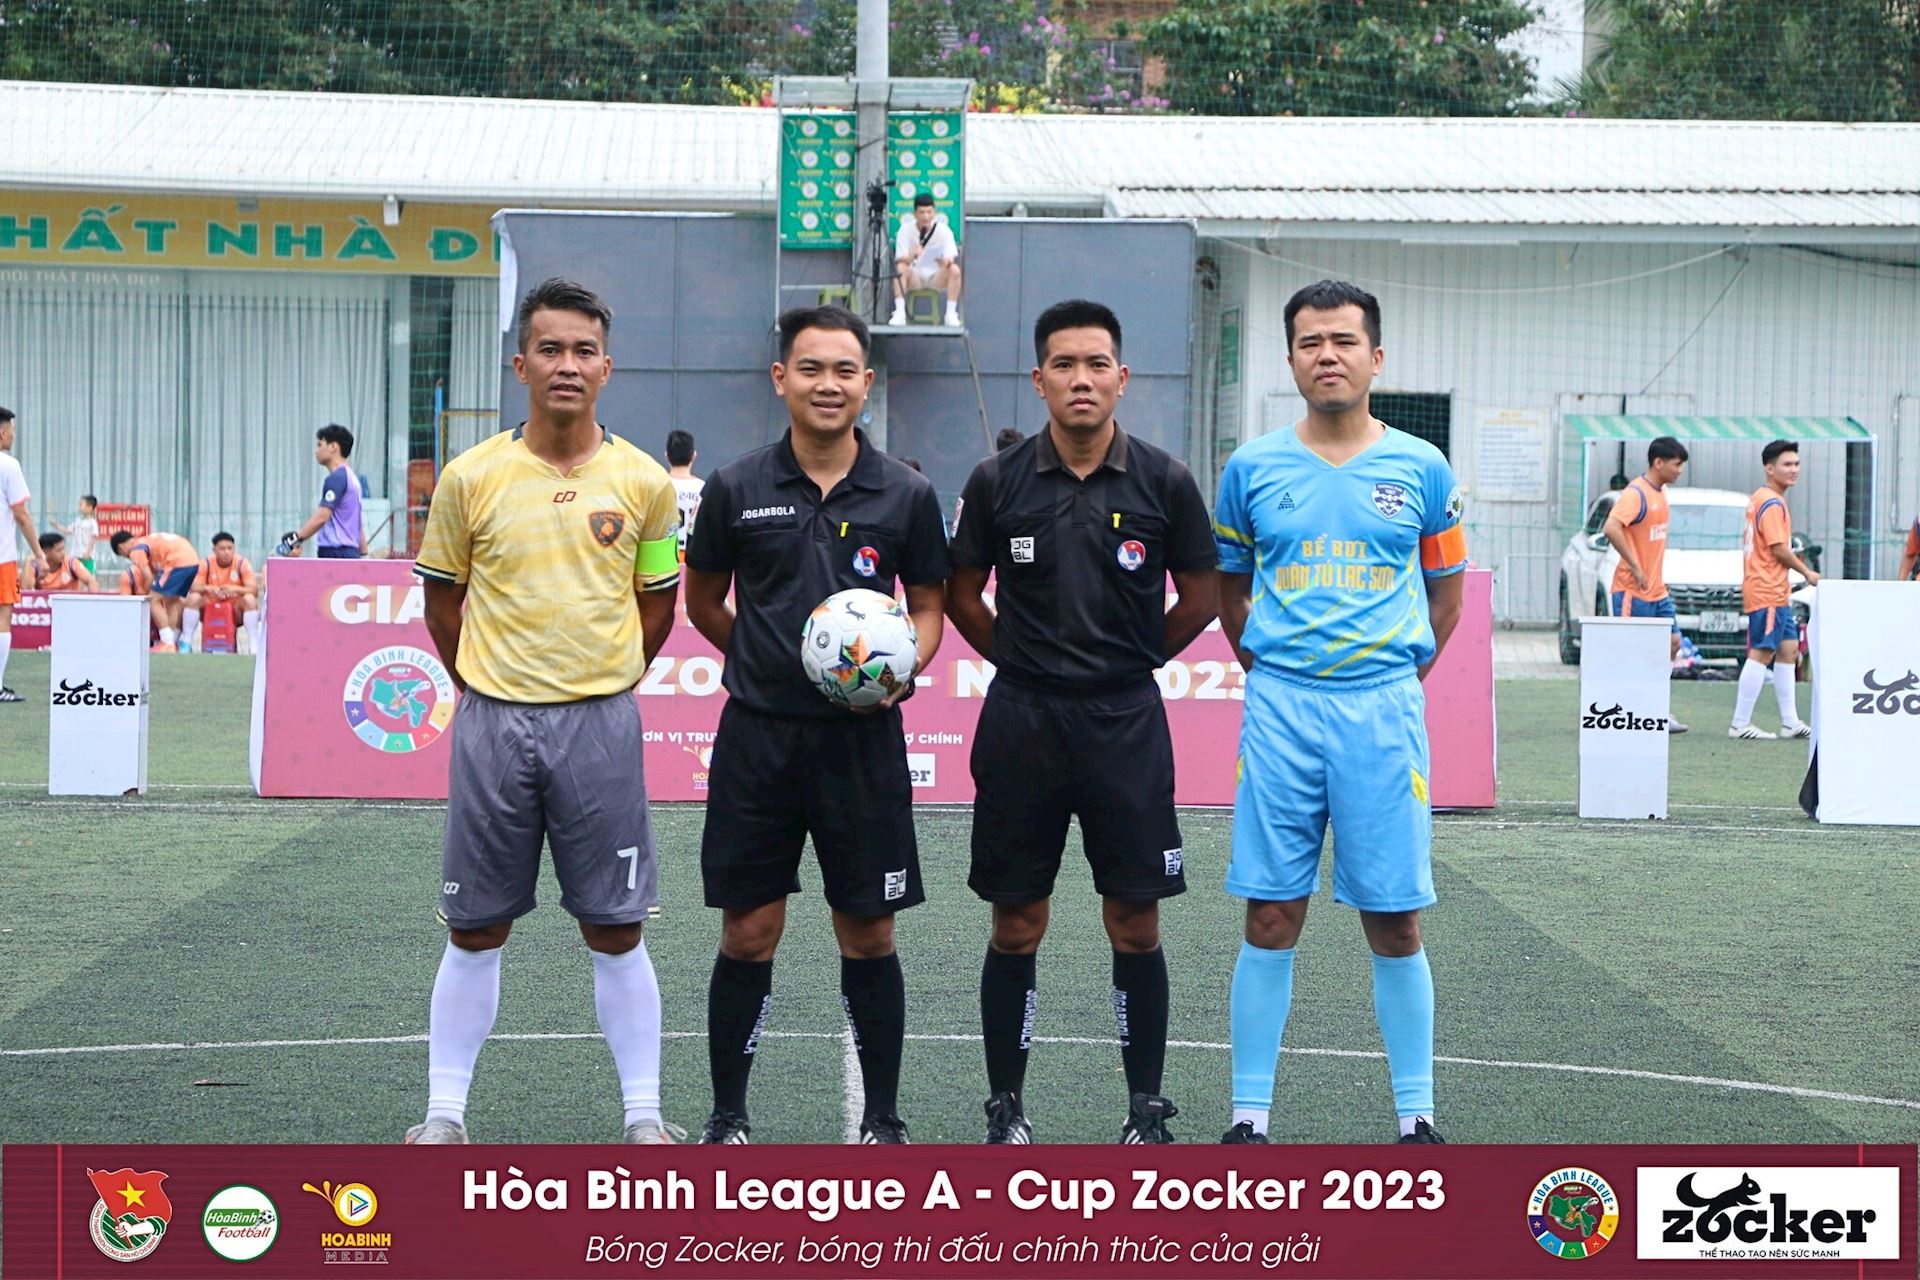 bong-zocker-Hoa-Bình-League-ZOCKER-CUP-2023-5